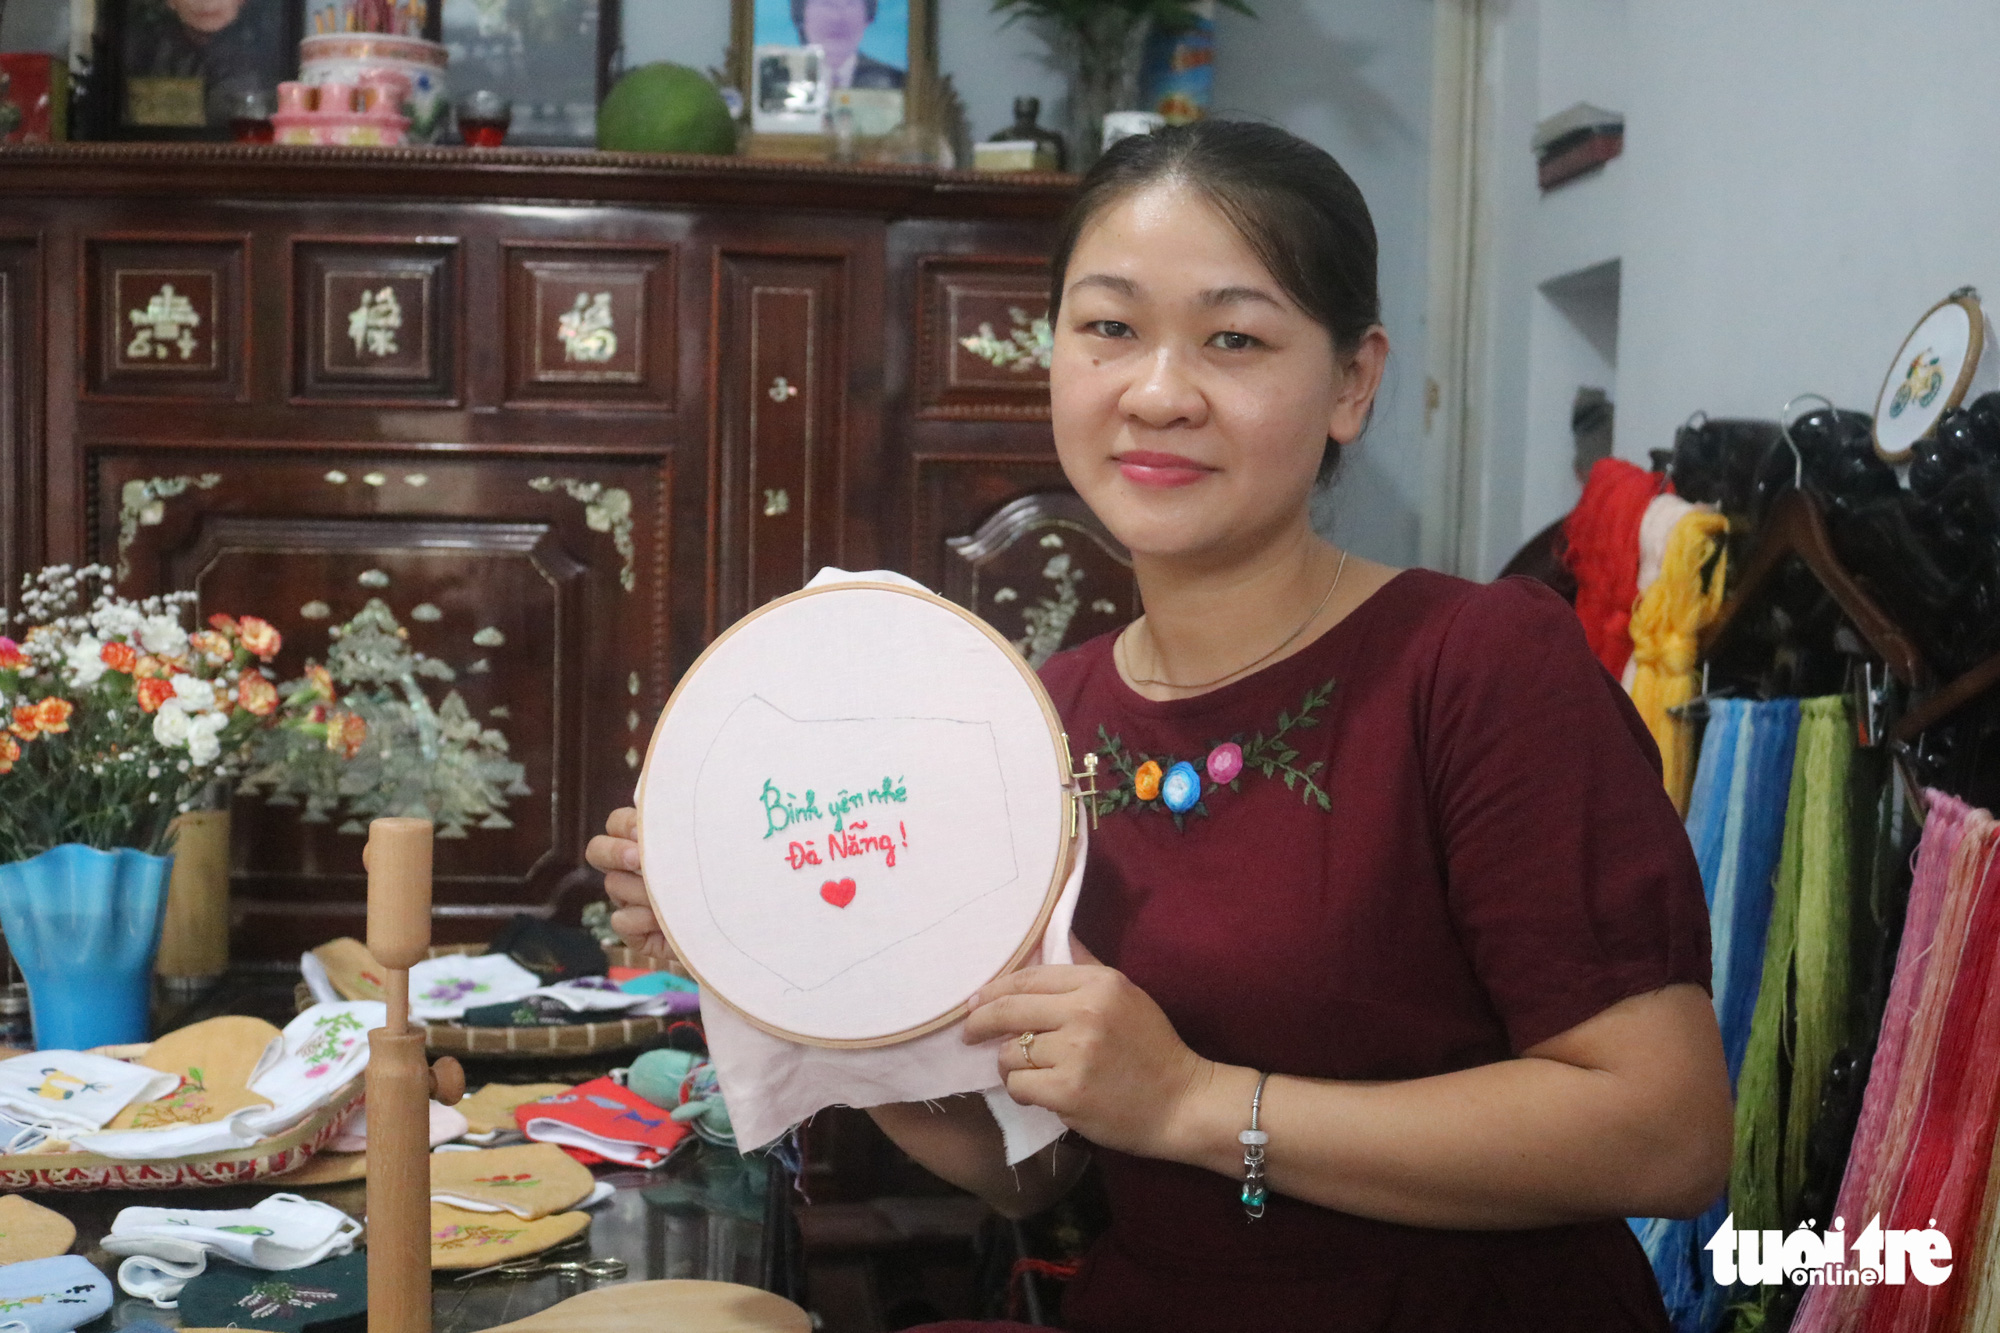 Amateur embroidery artists turn masks into fashion items amid coronavirus pandemic in Vietnam